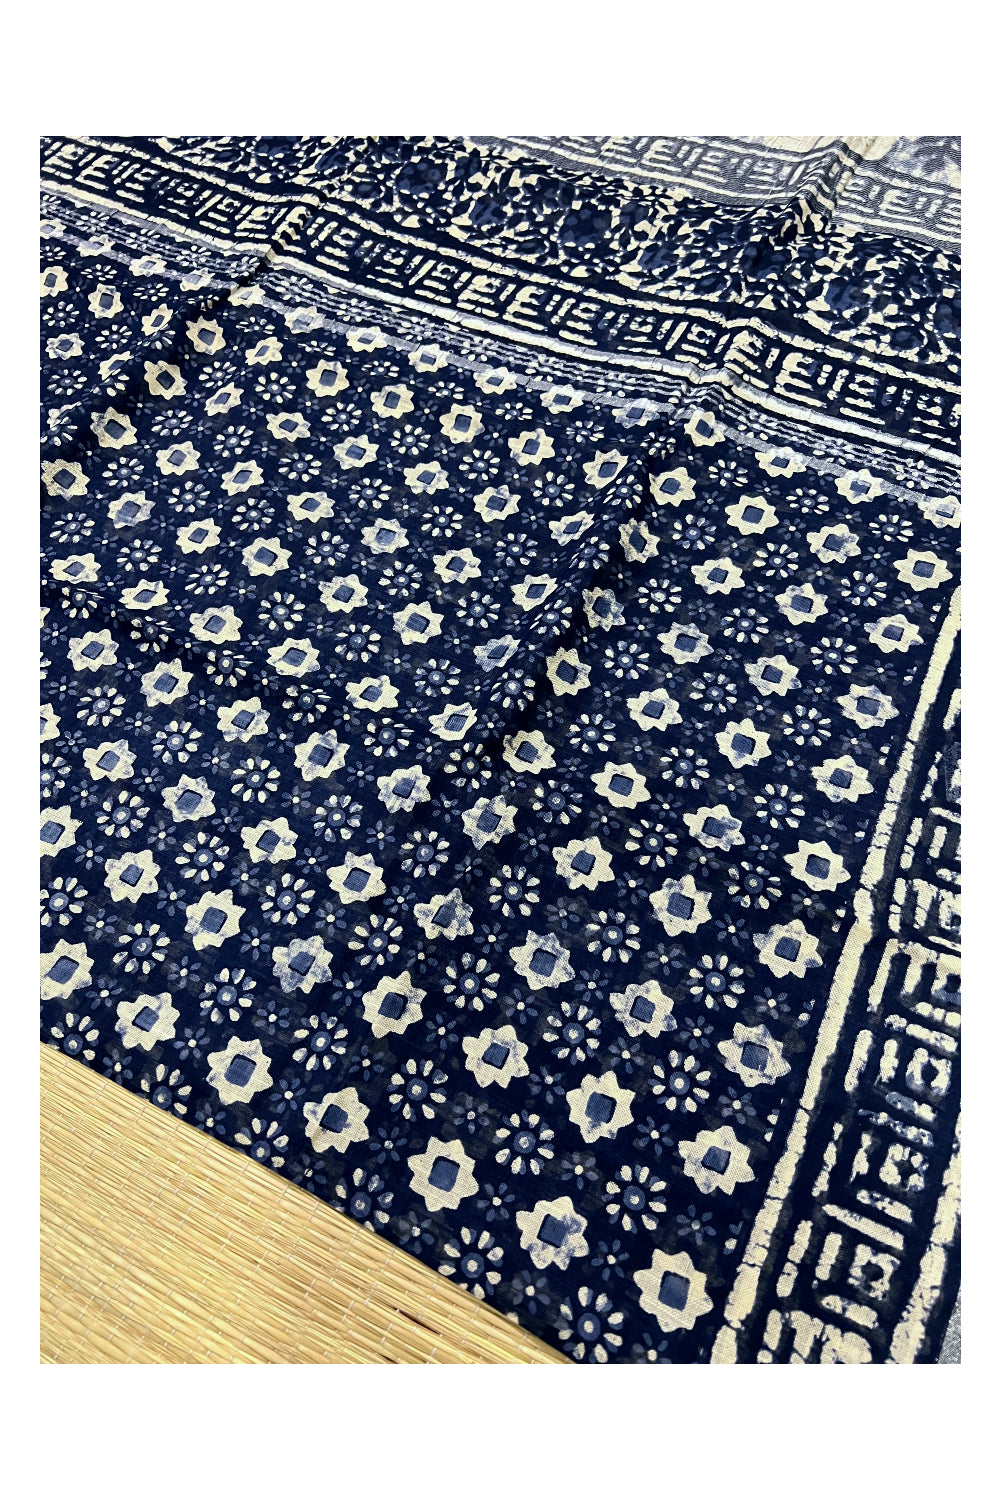 Southloom Linen Indigo Blue Saree with White Designer Prints and Tassels on Pallu